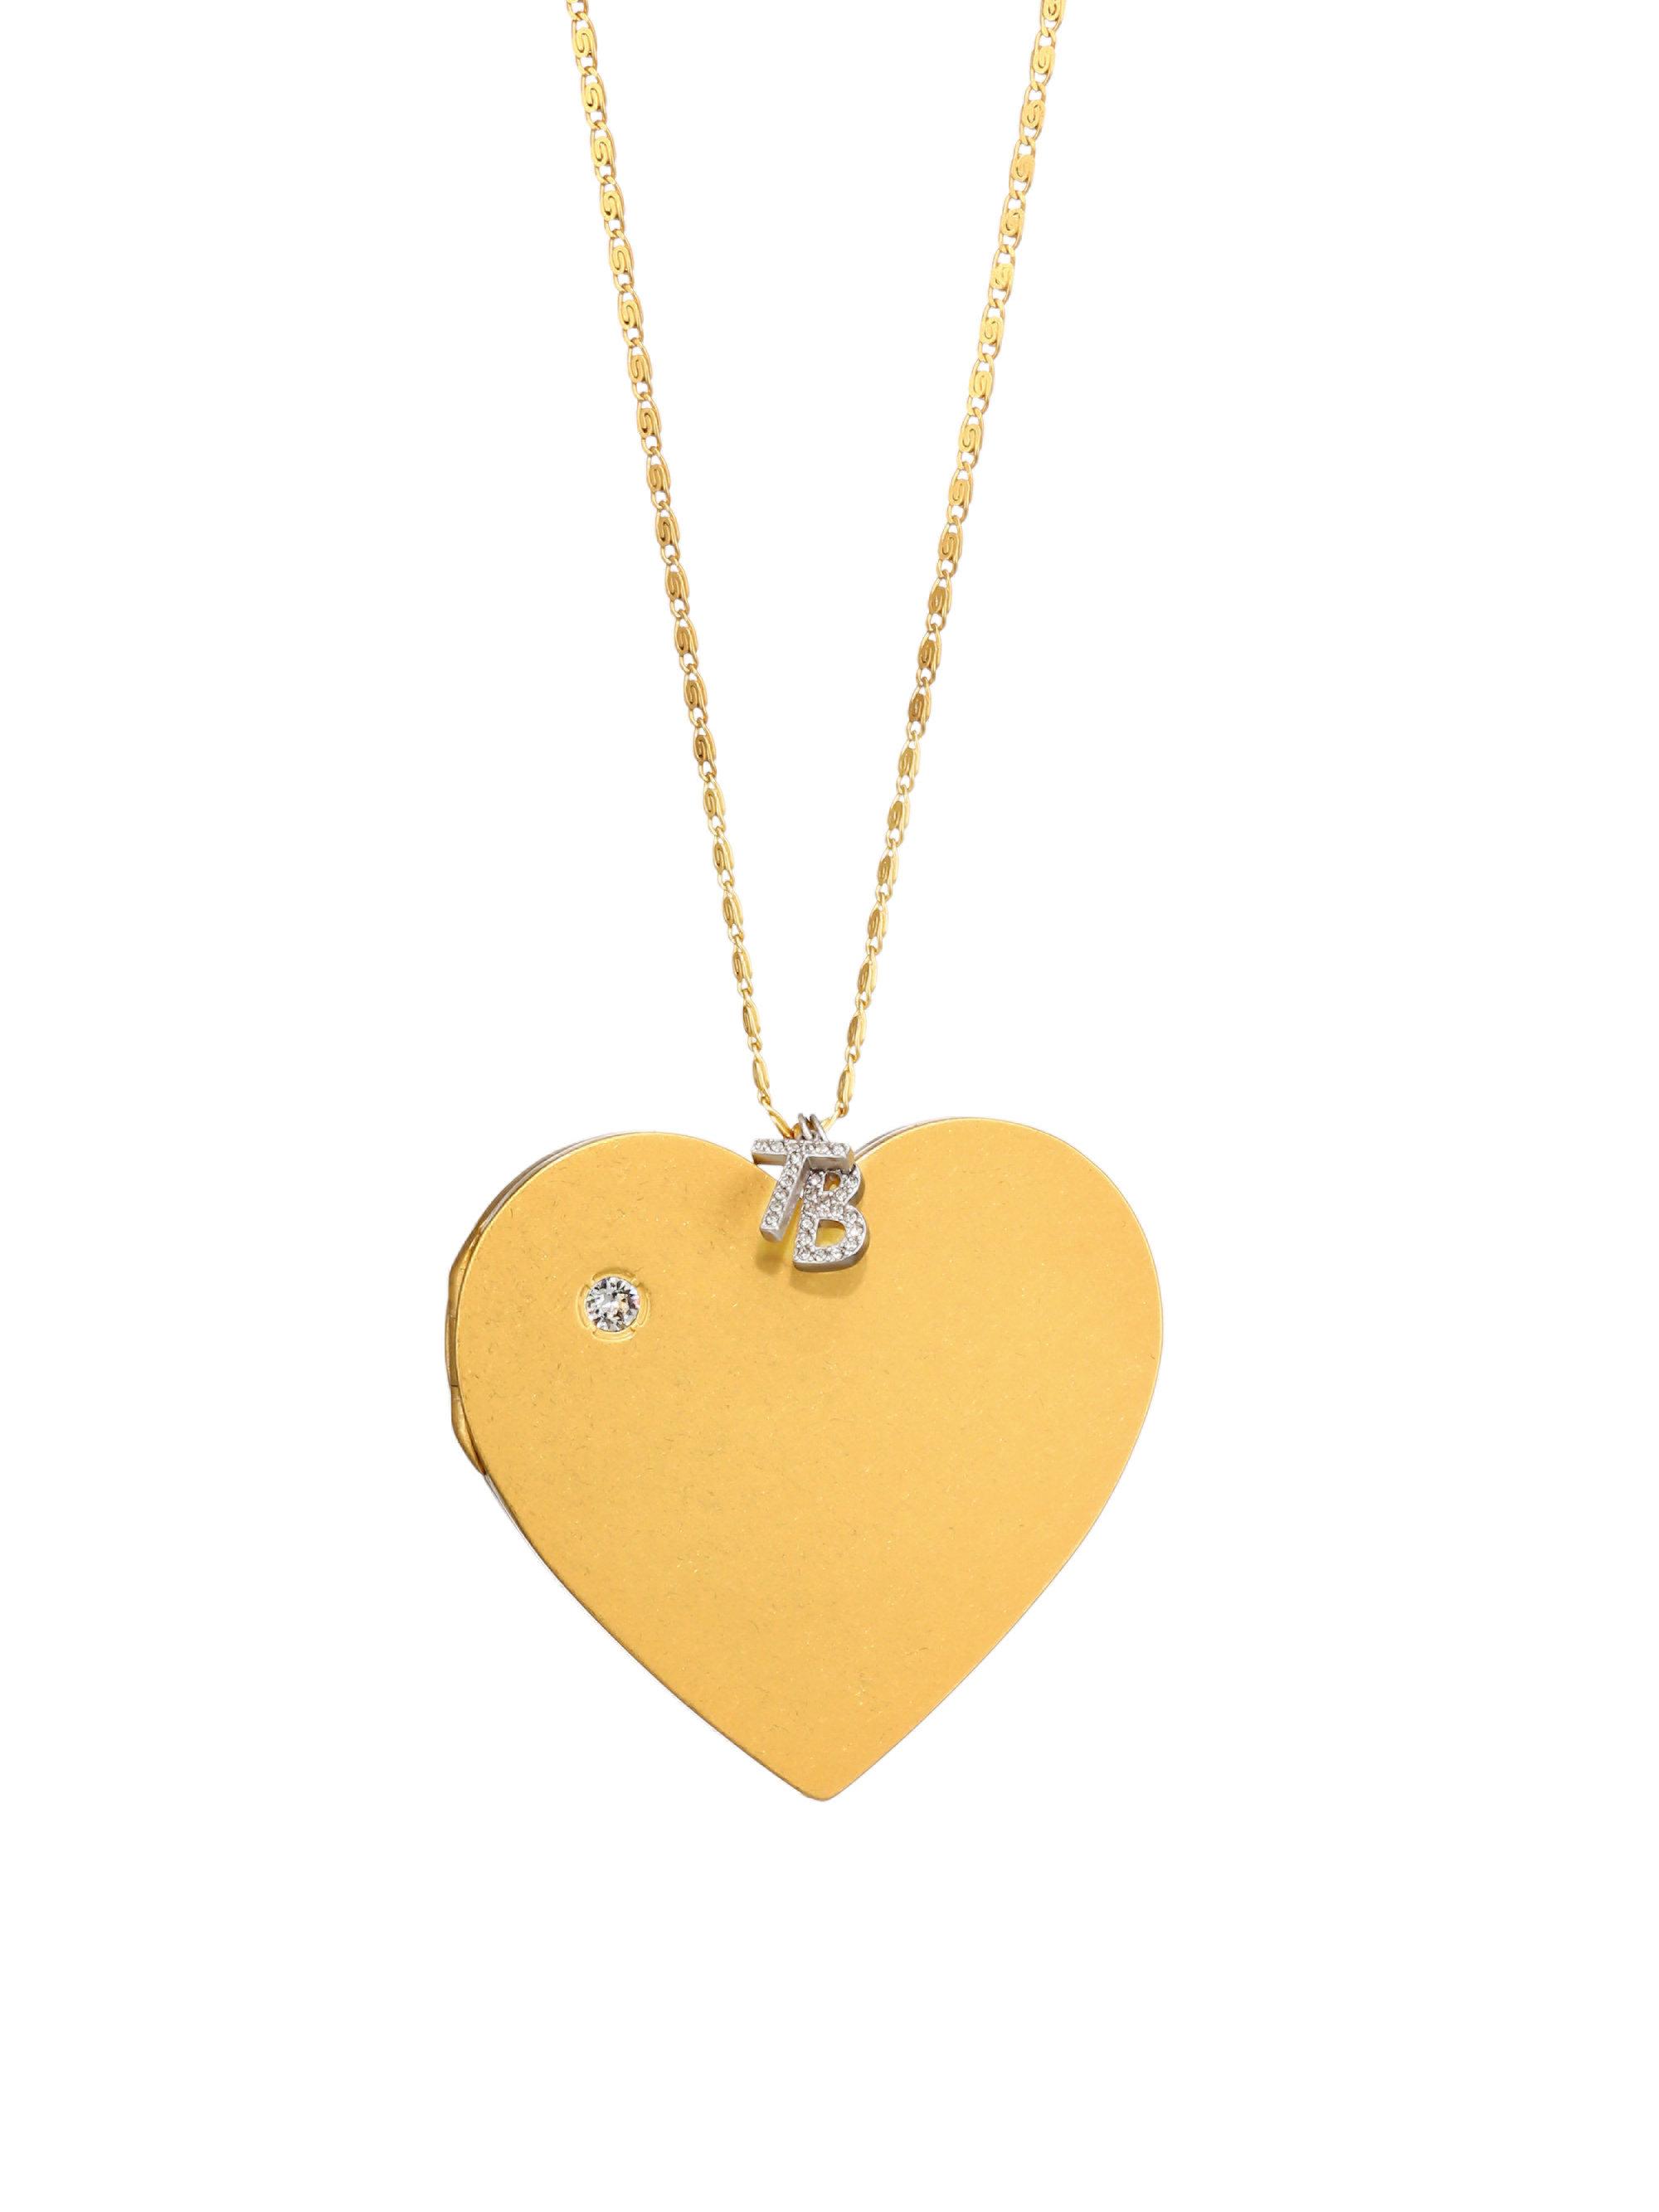 Tory Burch Heart Locket Pendant Necklace in Metallic | Lyst